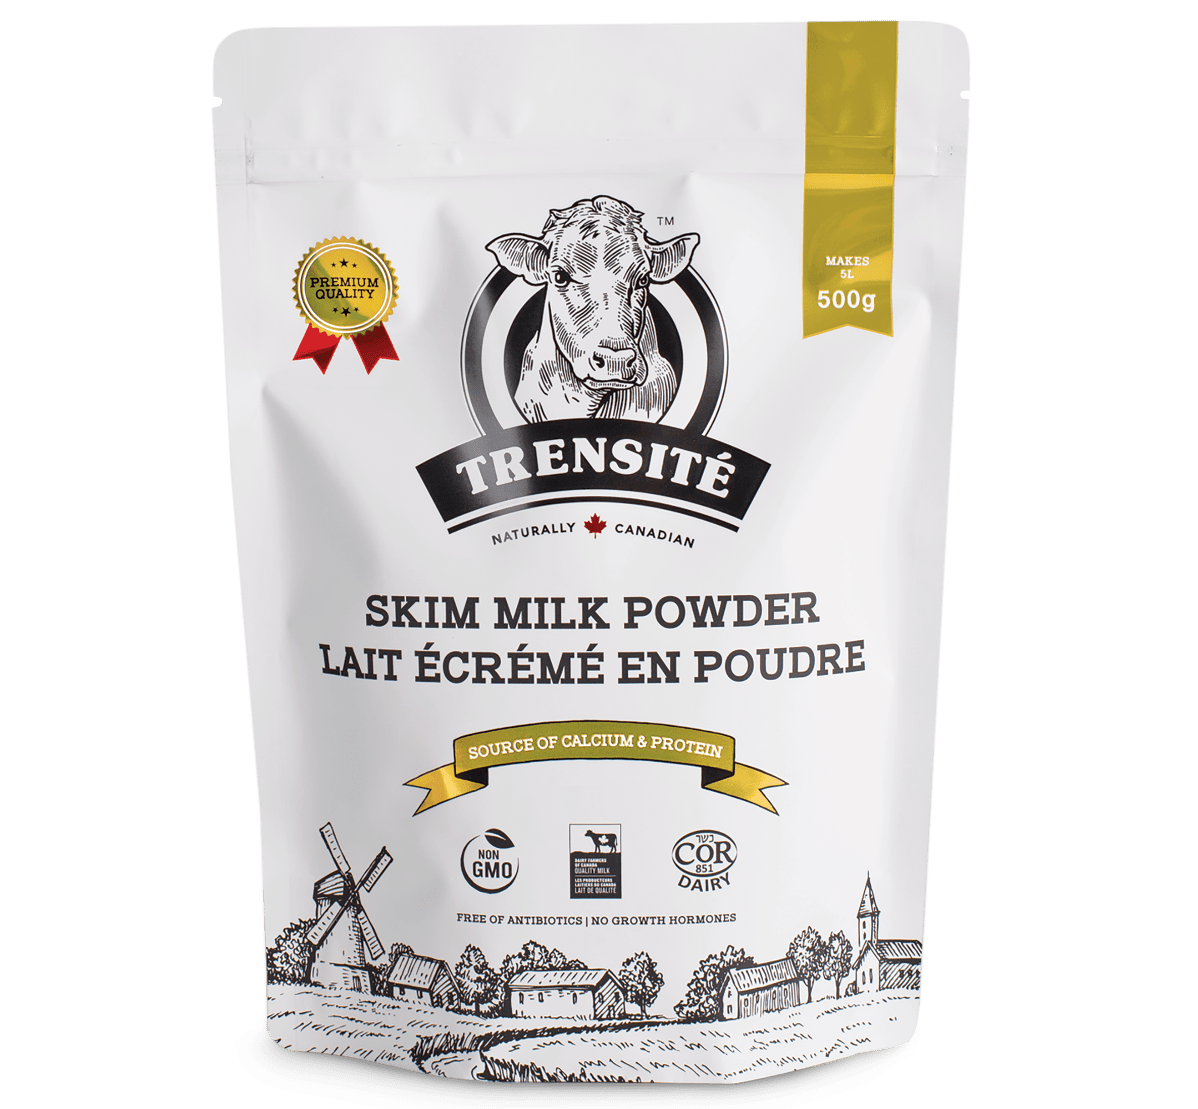 Trensite Dairy Skim Milk Powder Products